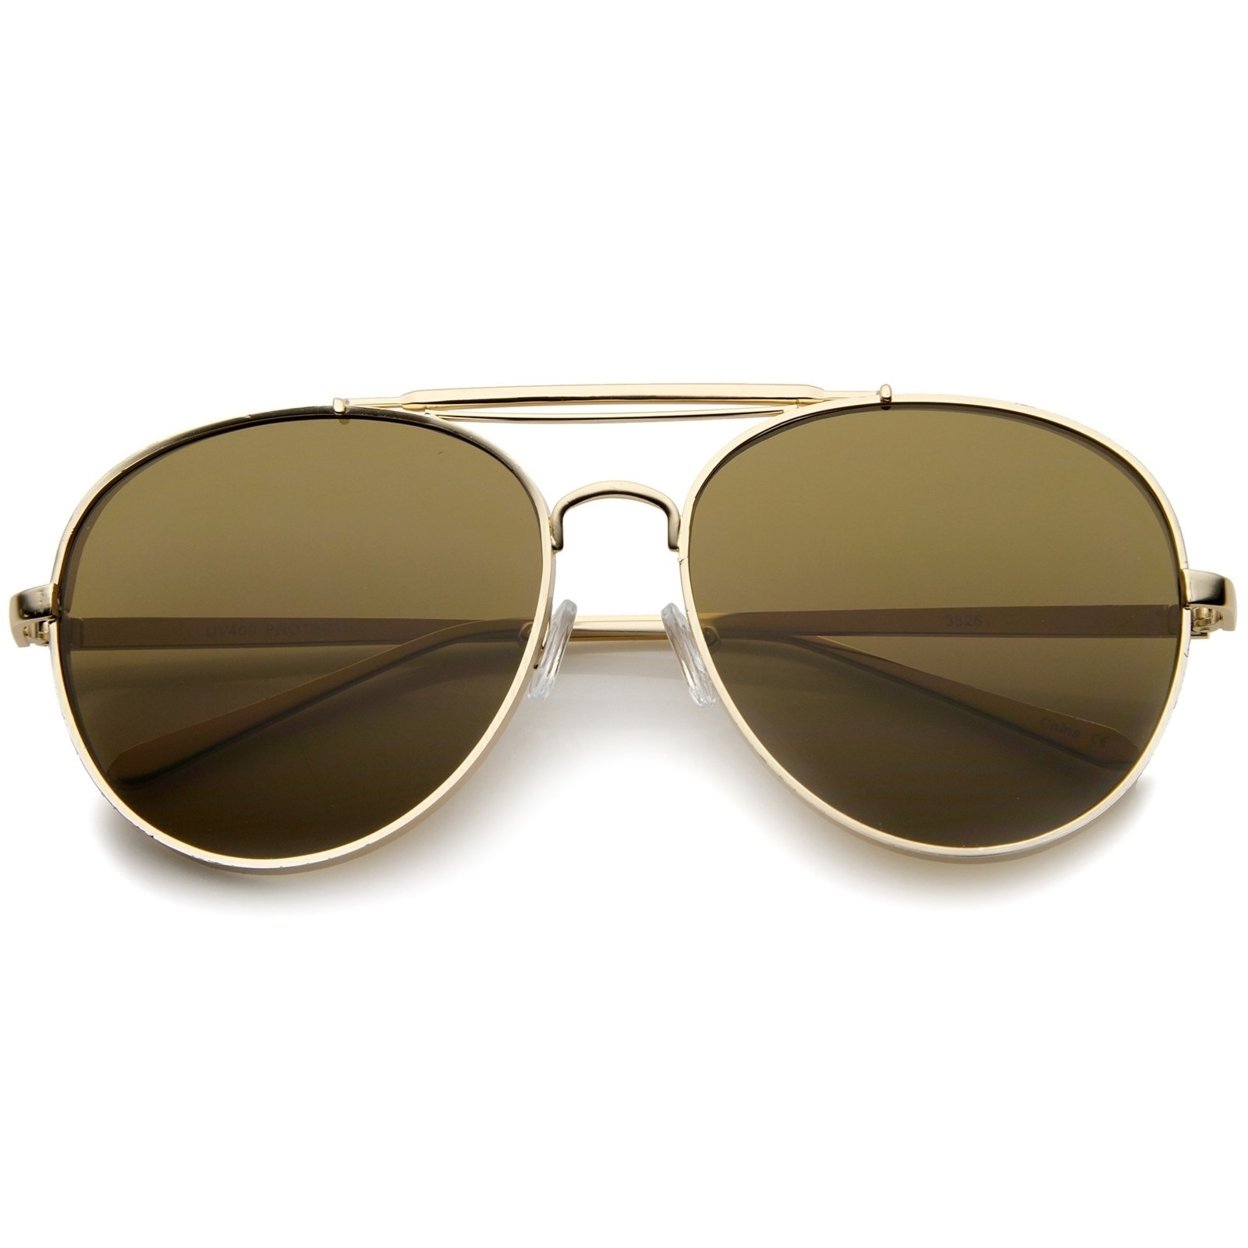 Modern Fashion Flat Lens Full Metal Side Cover Frame Double Bridged Aviator Sunglasses - Gold / Brown